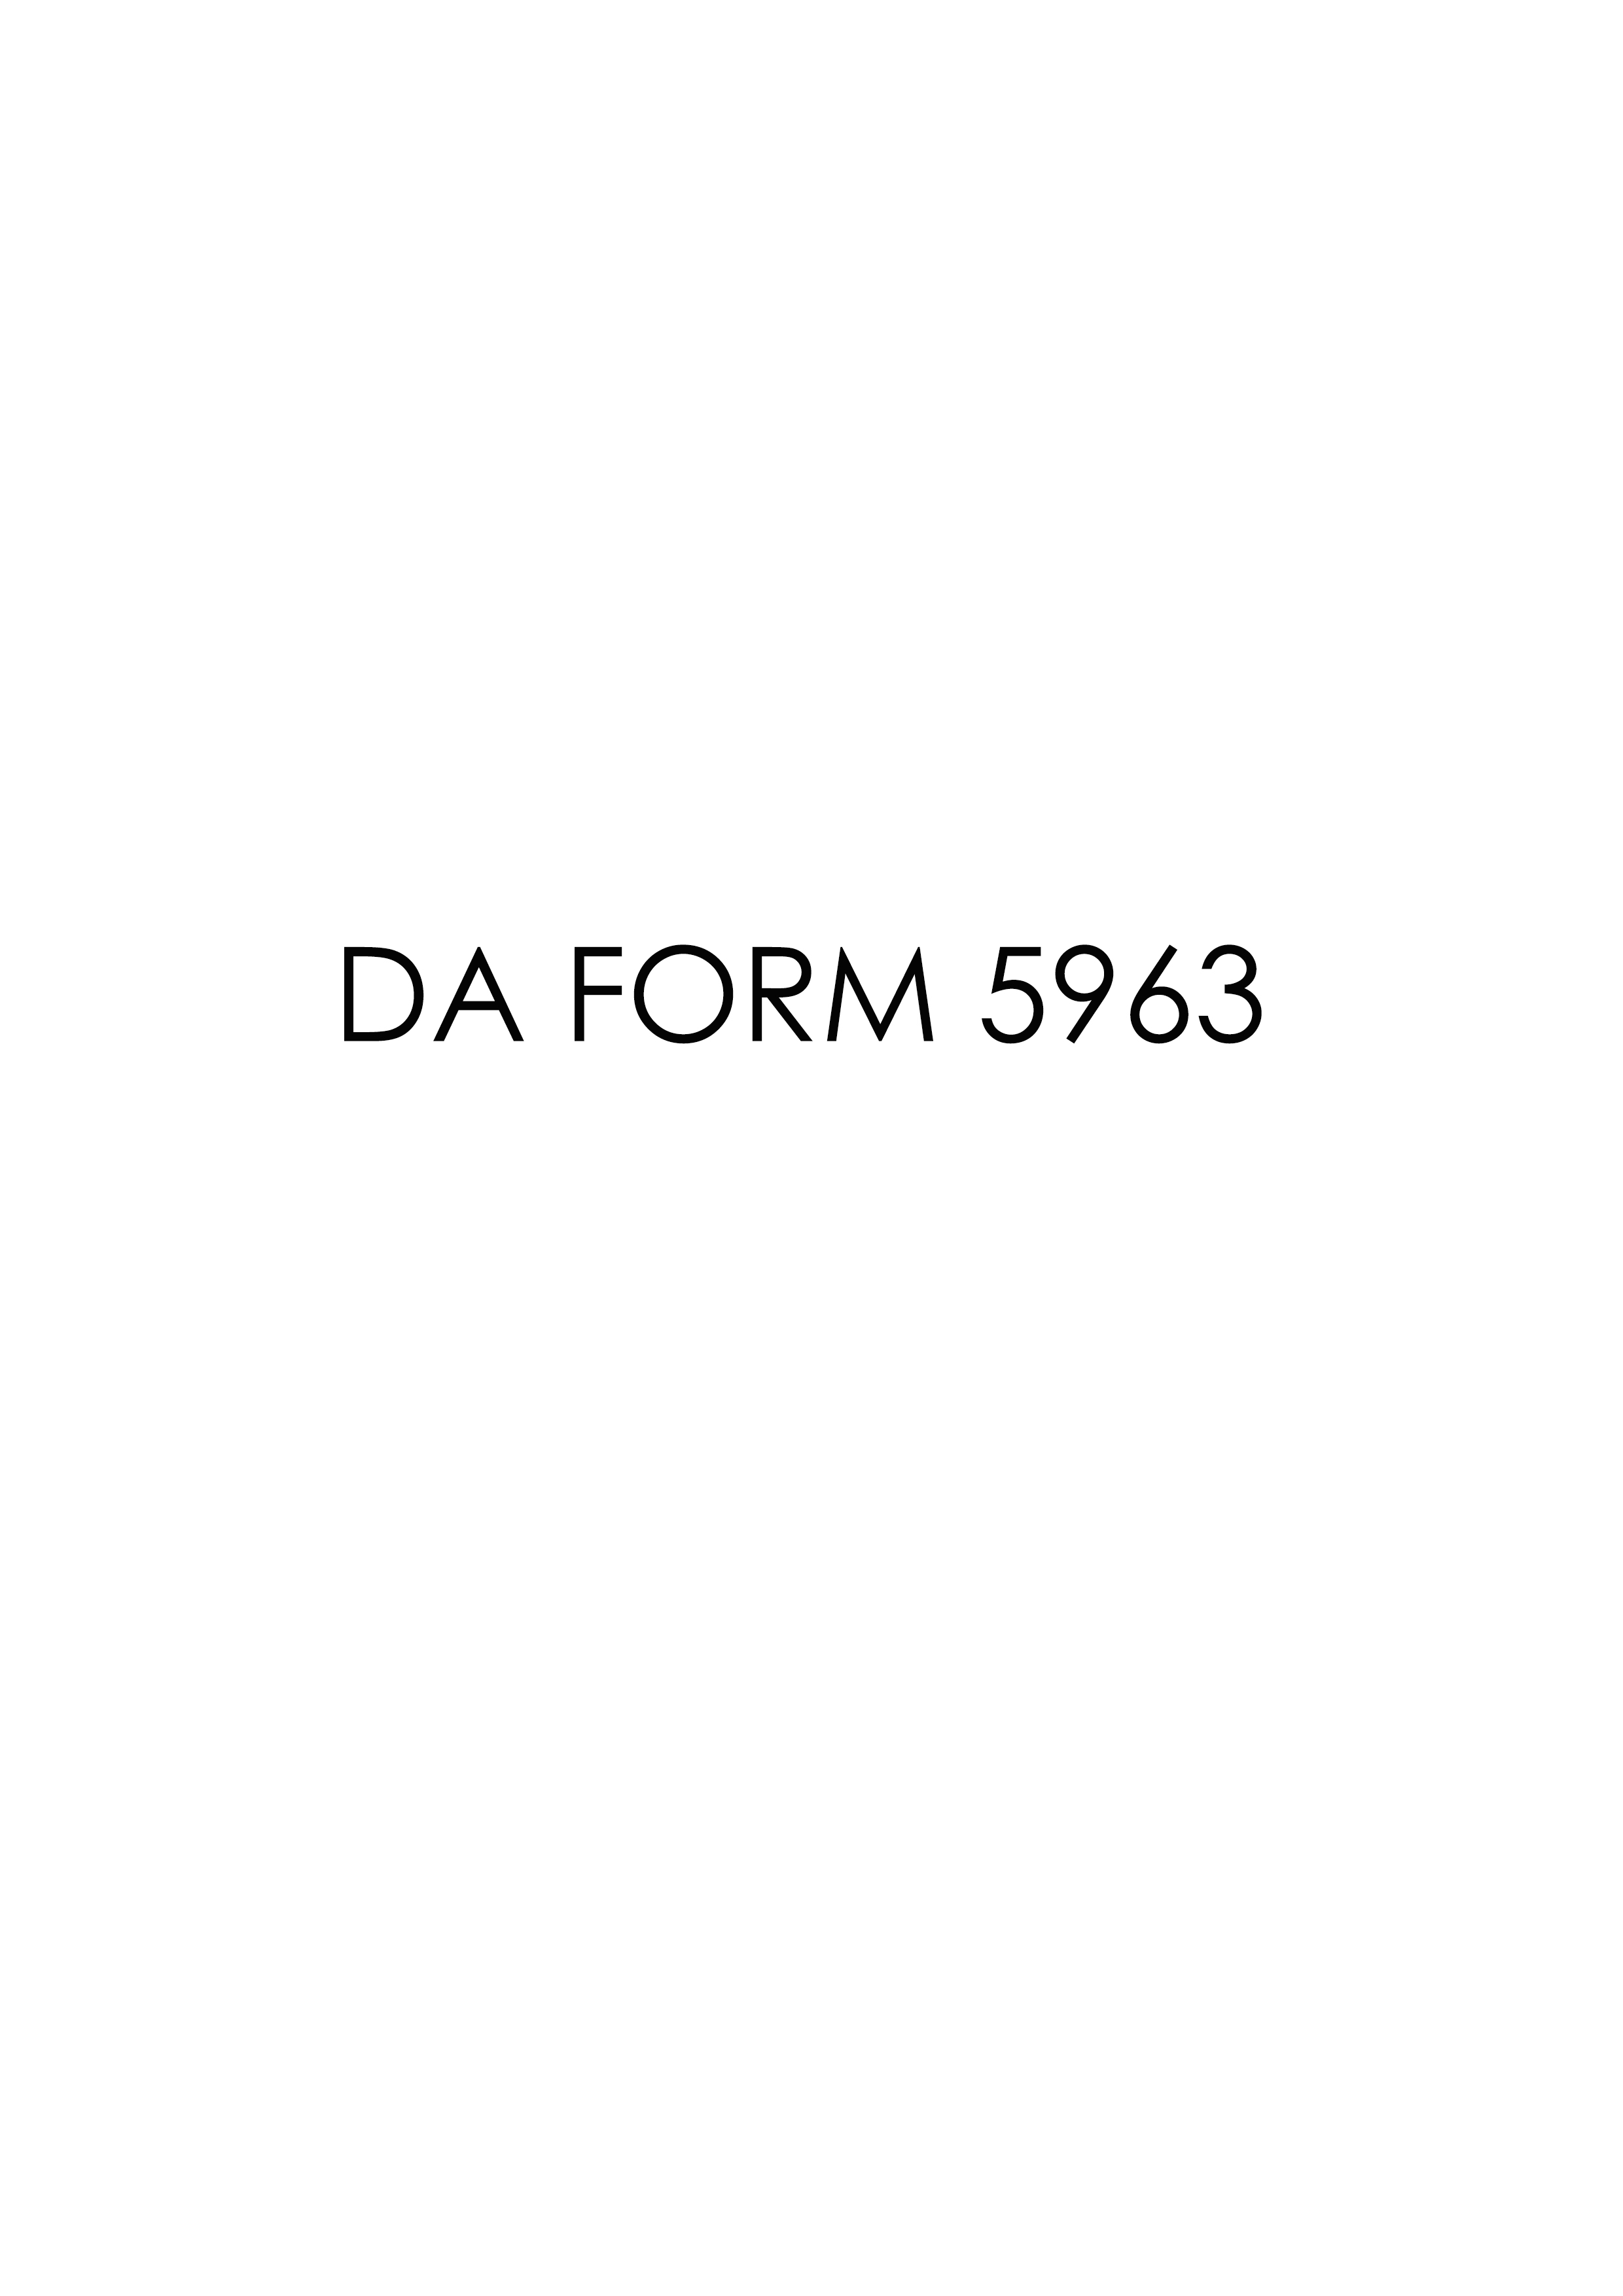 da Form 5963 fillable